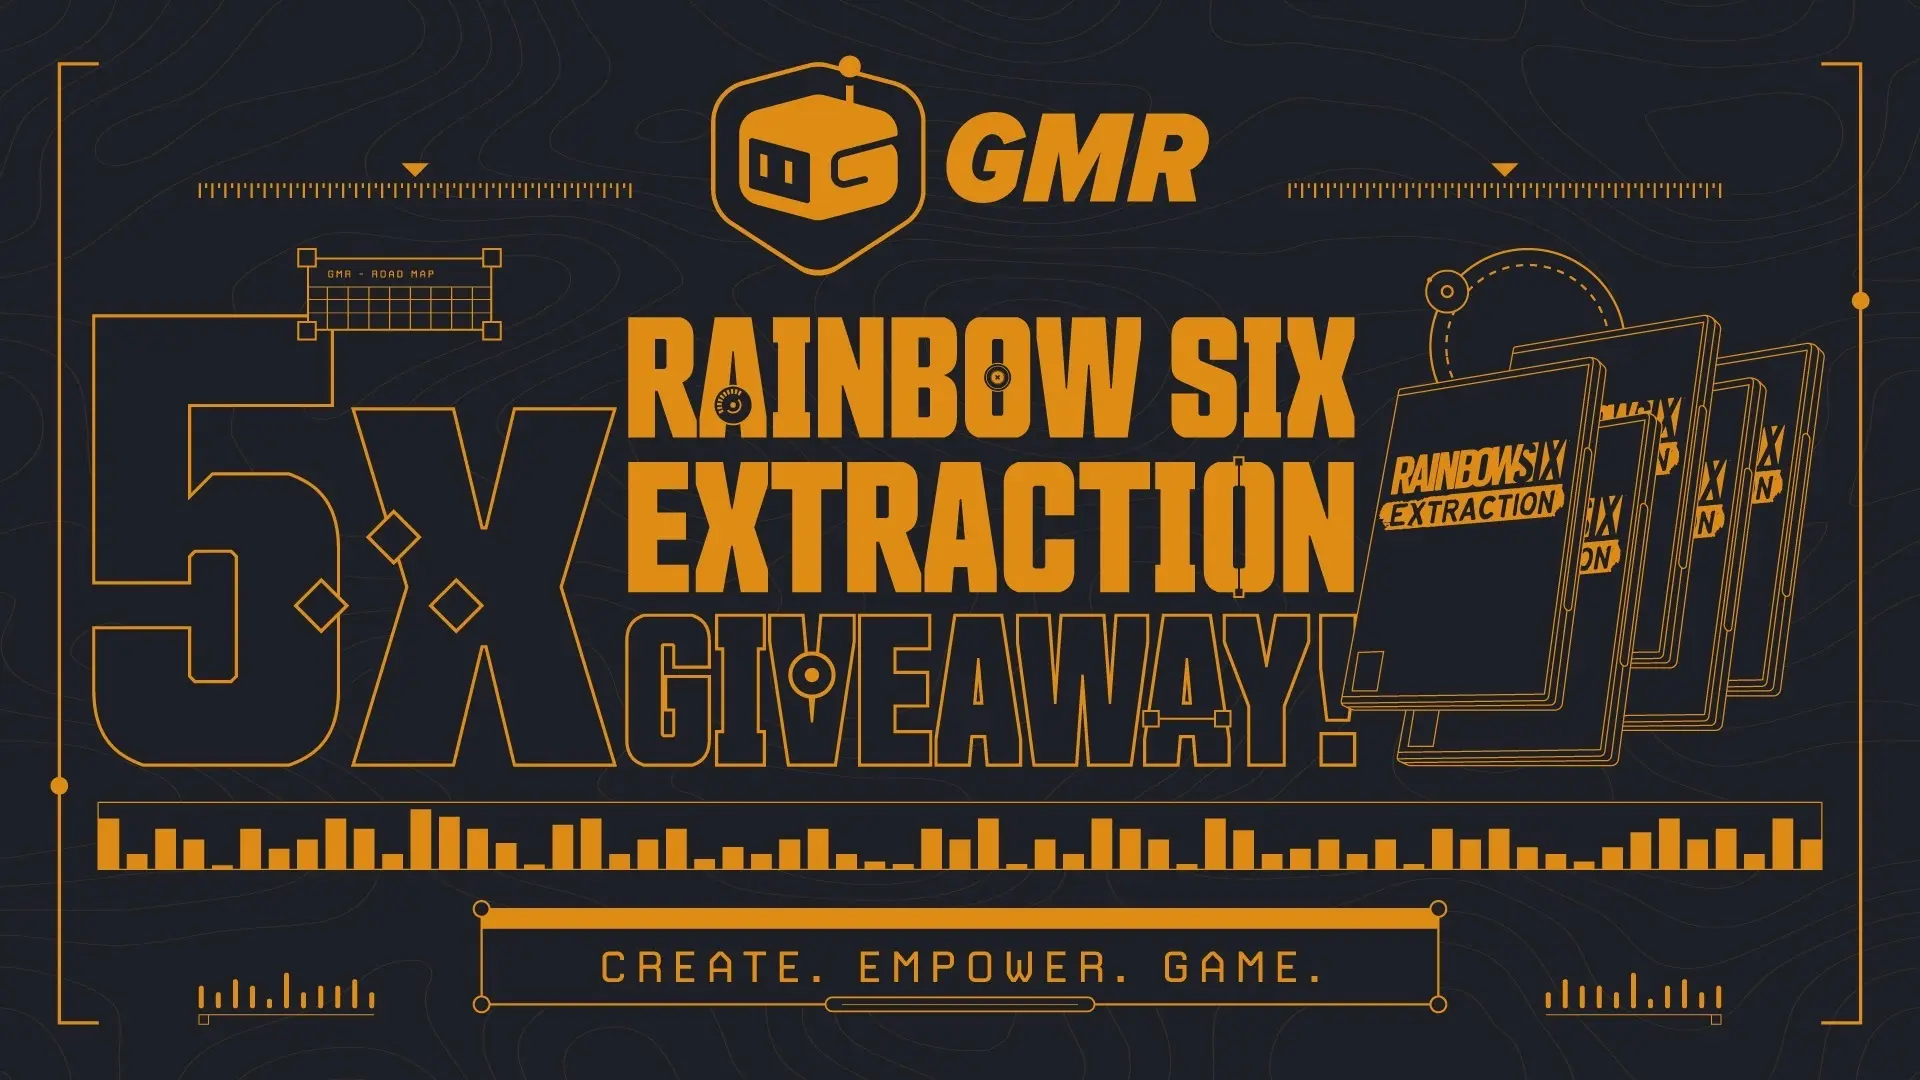 5x Rainbow Six Extraction Giveaway